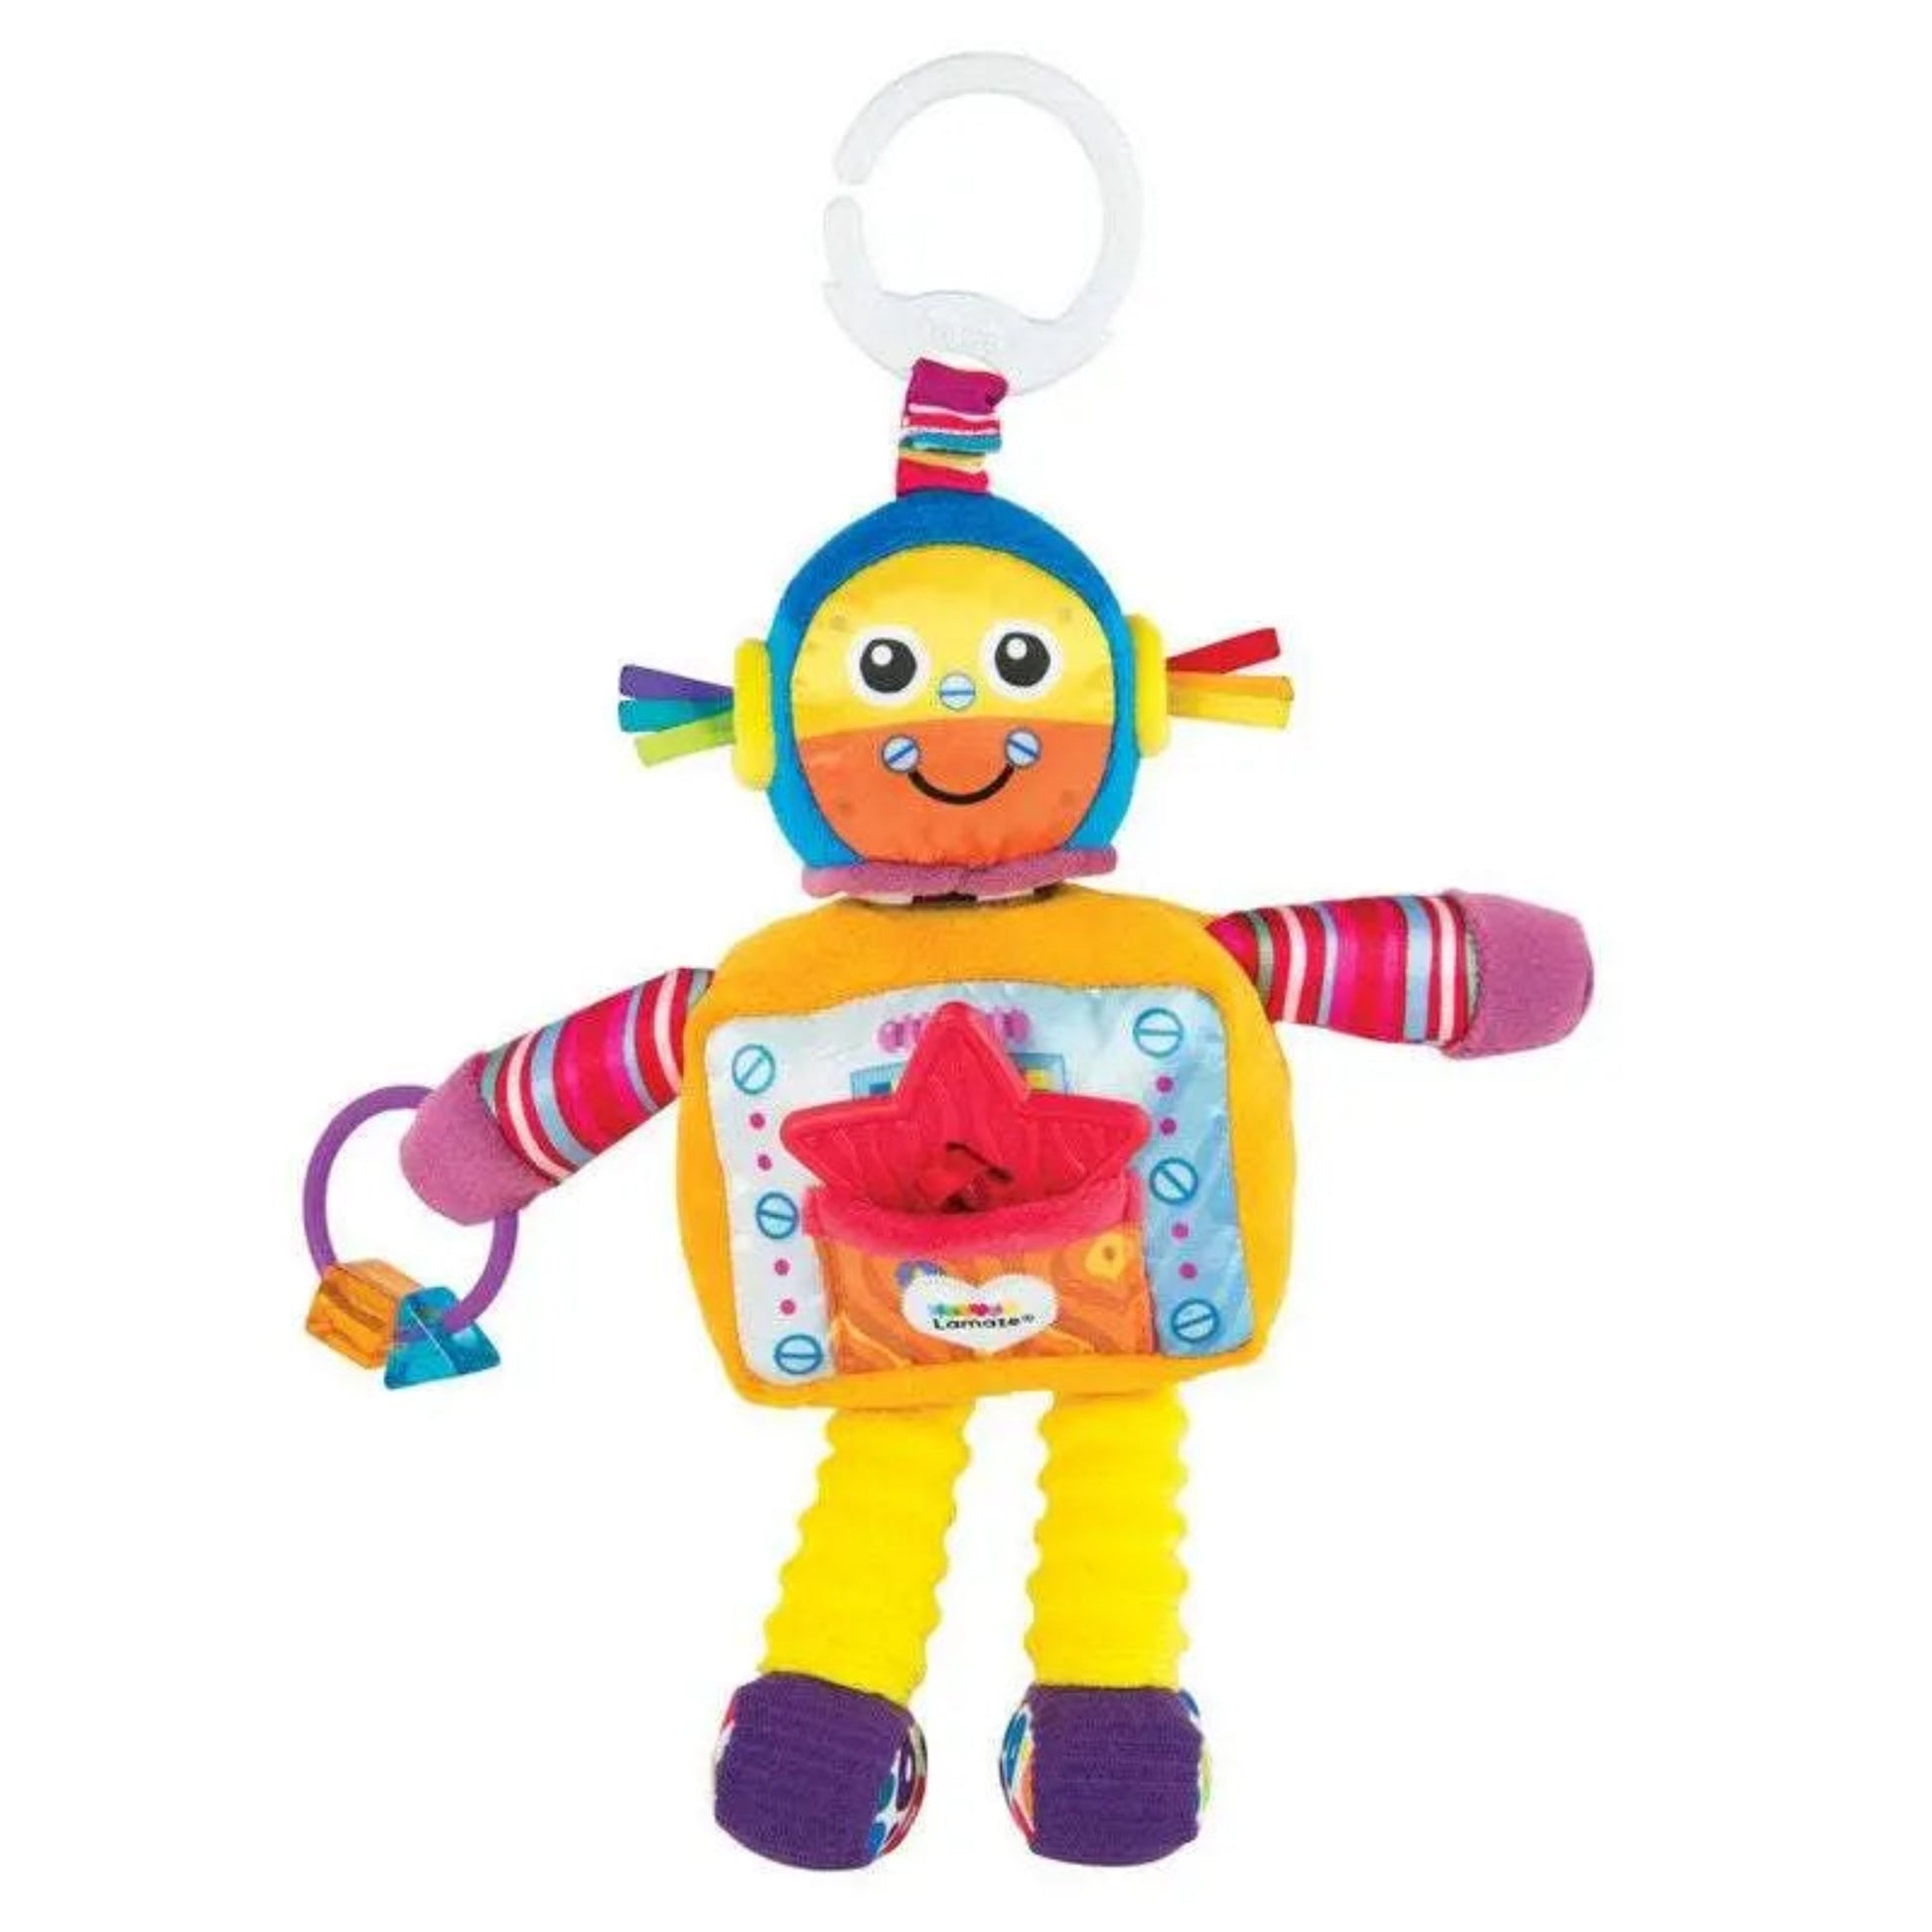 Soft Toy & Teddy Bear Lamaze Clip & Go Mitchell Moonwalker Baby 0m+ Educational Toy for Stroller/Bag Lamaze 16.95